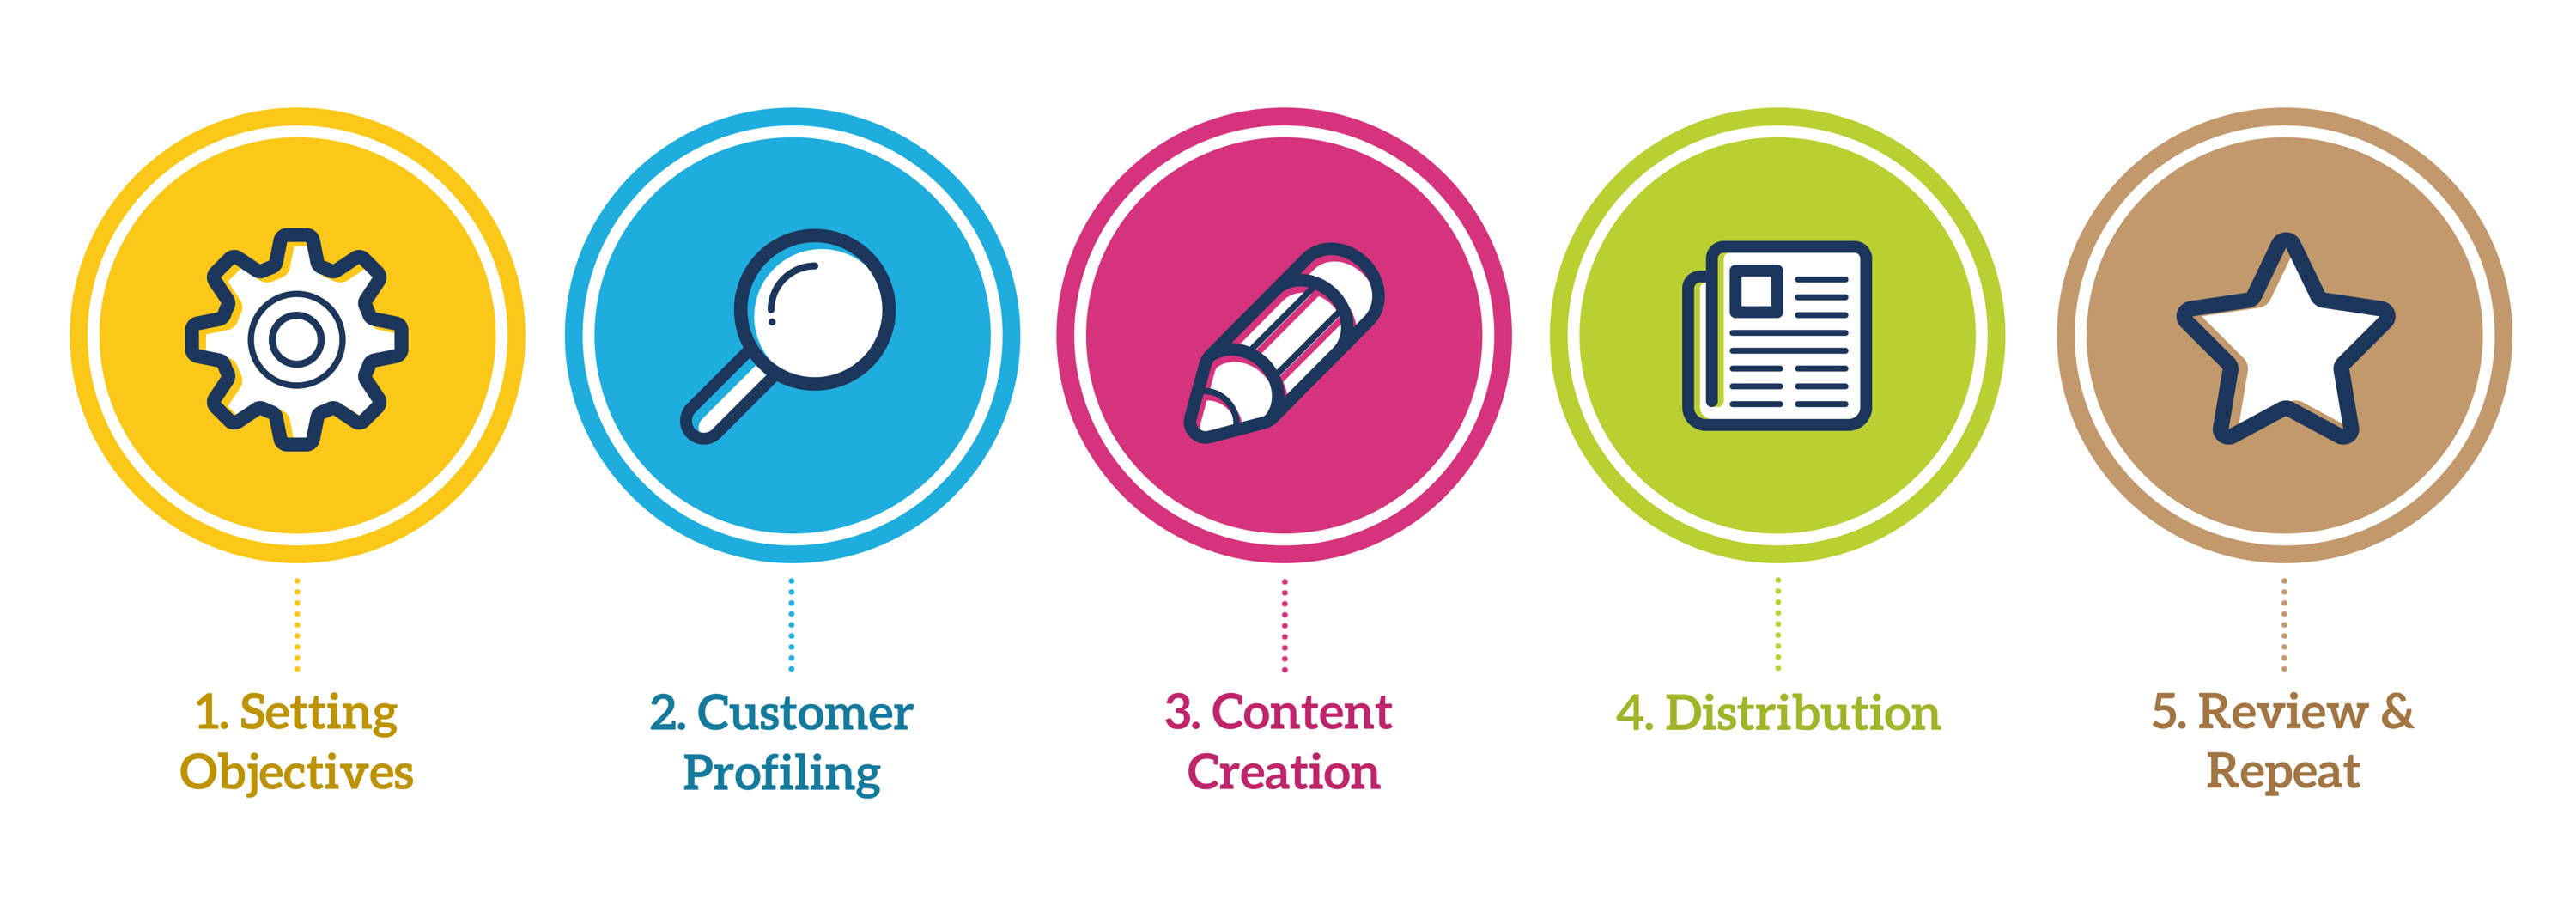 content-marketing-steps-6